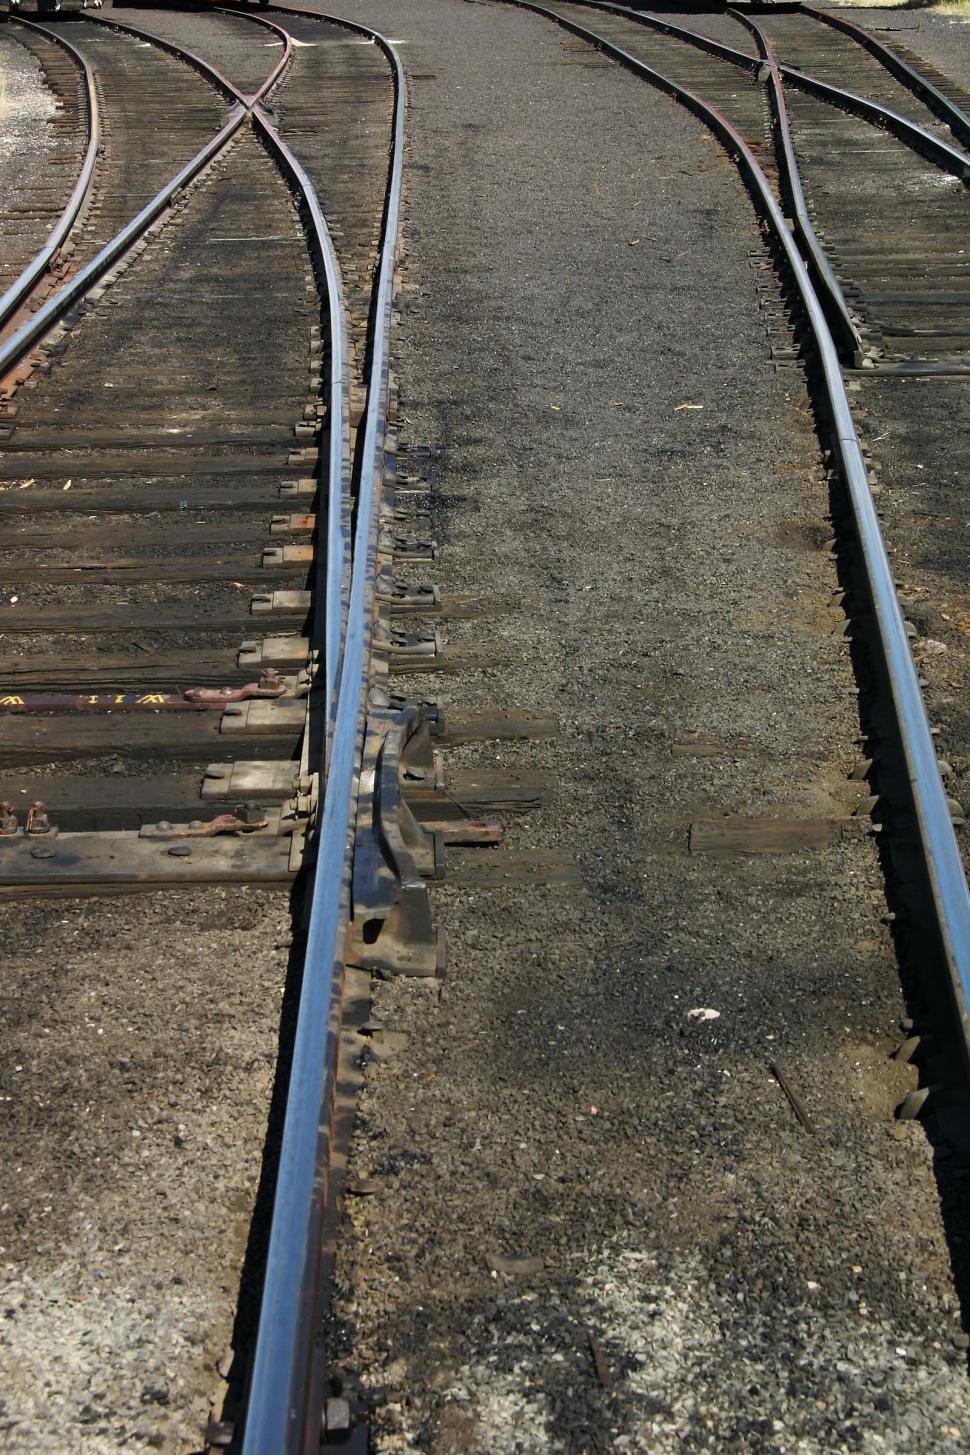 Free Image of train track tracks rail railroad tie ties empty parallel 